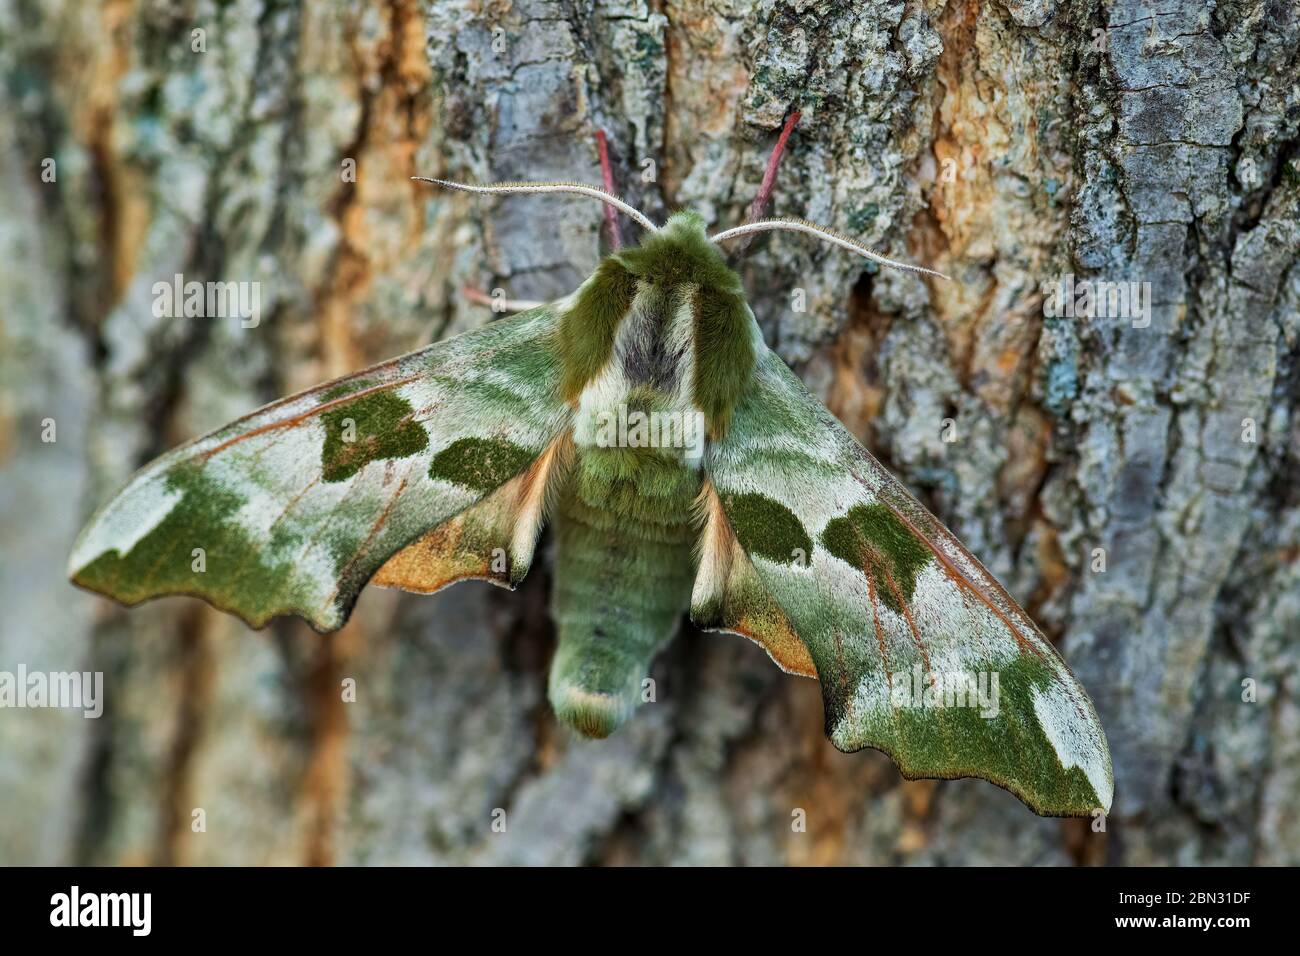 Lime Hawk-moth - Mimas tiliae, beautiful green hawk-moth from European forests and woodlands, Zlin, Czech Republic. Stock Photo